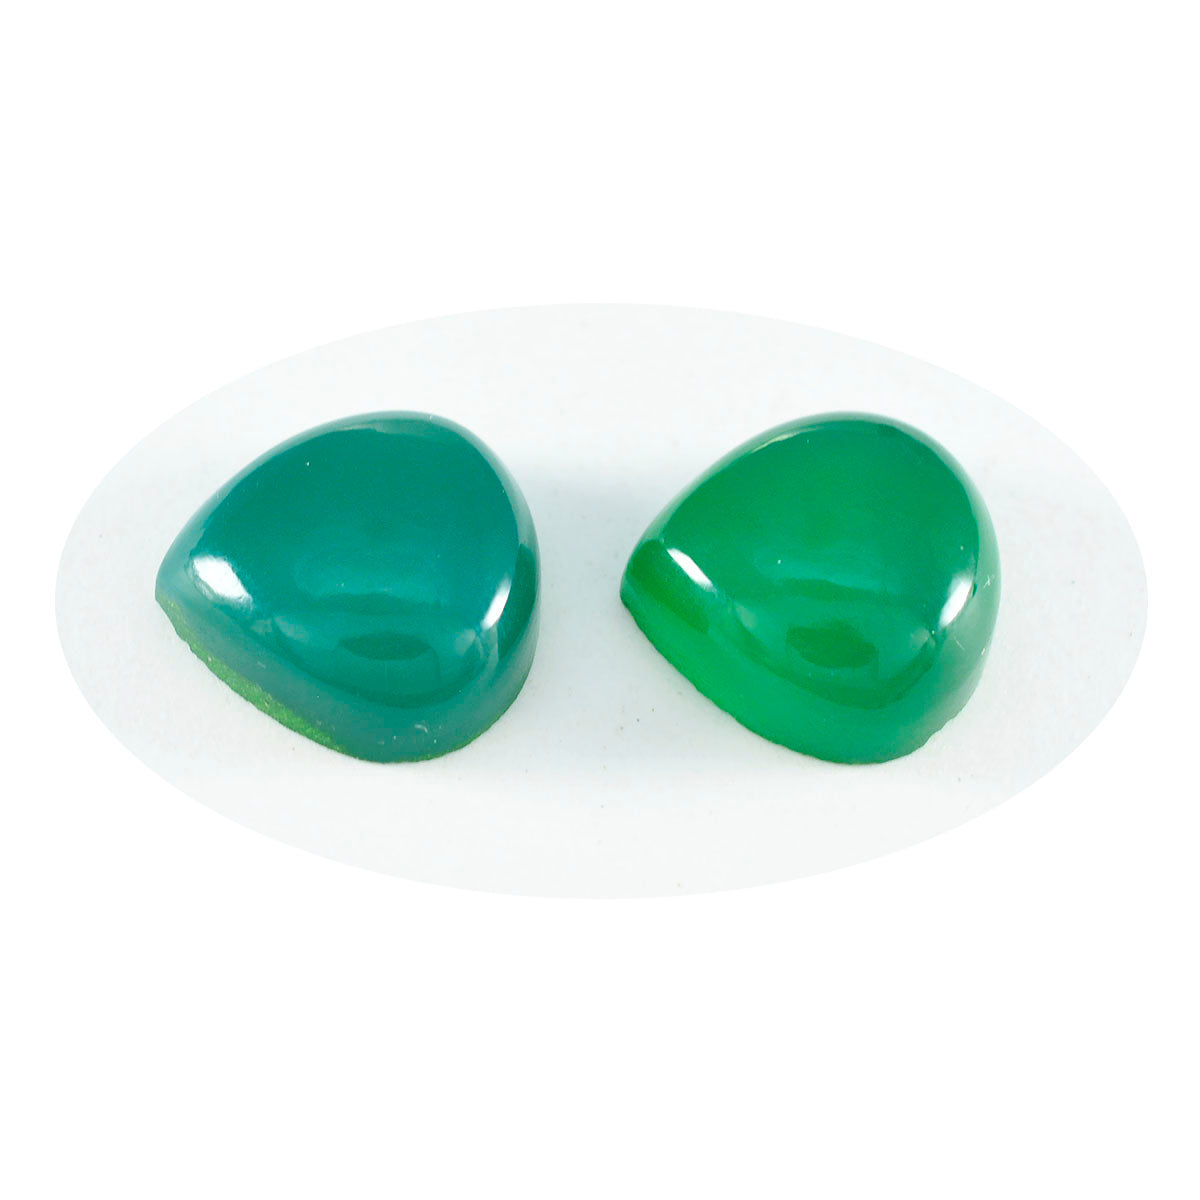 Riyogems 1 Stück grüner Onyx-Cabochon, 11 x 11 mm, Herzform, wunderbarer Qualitäts-Edelstein